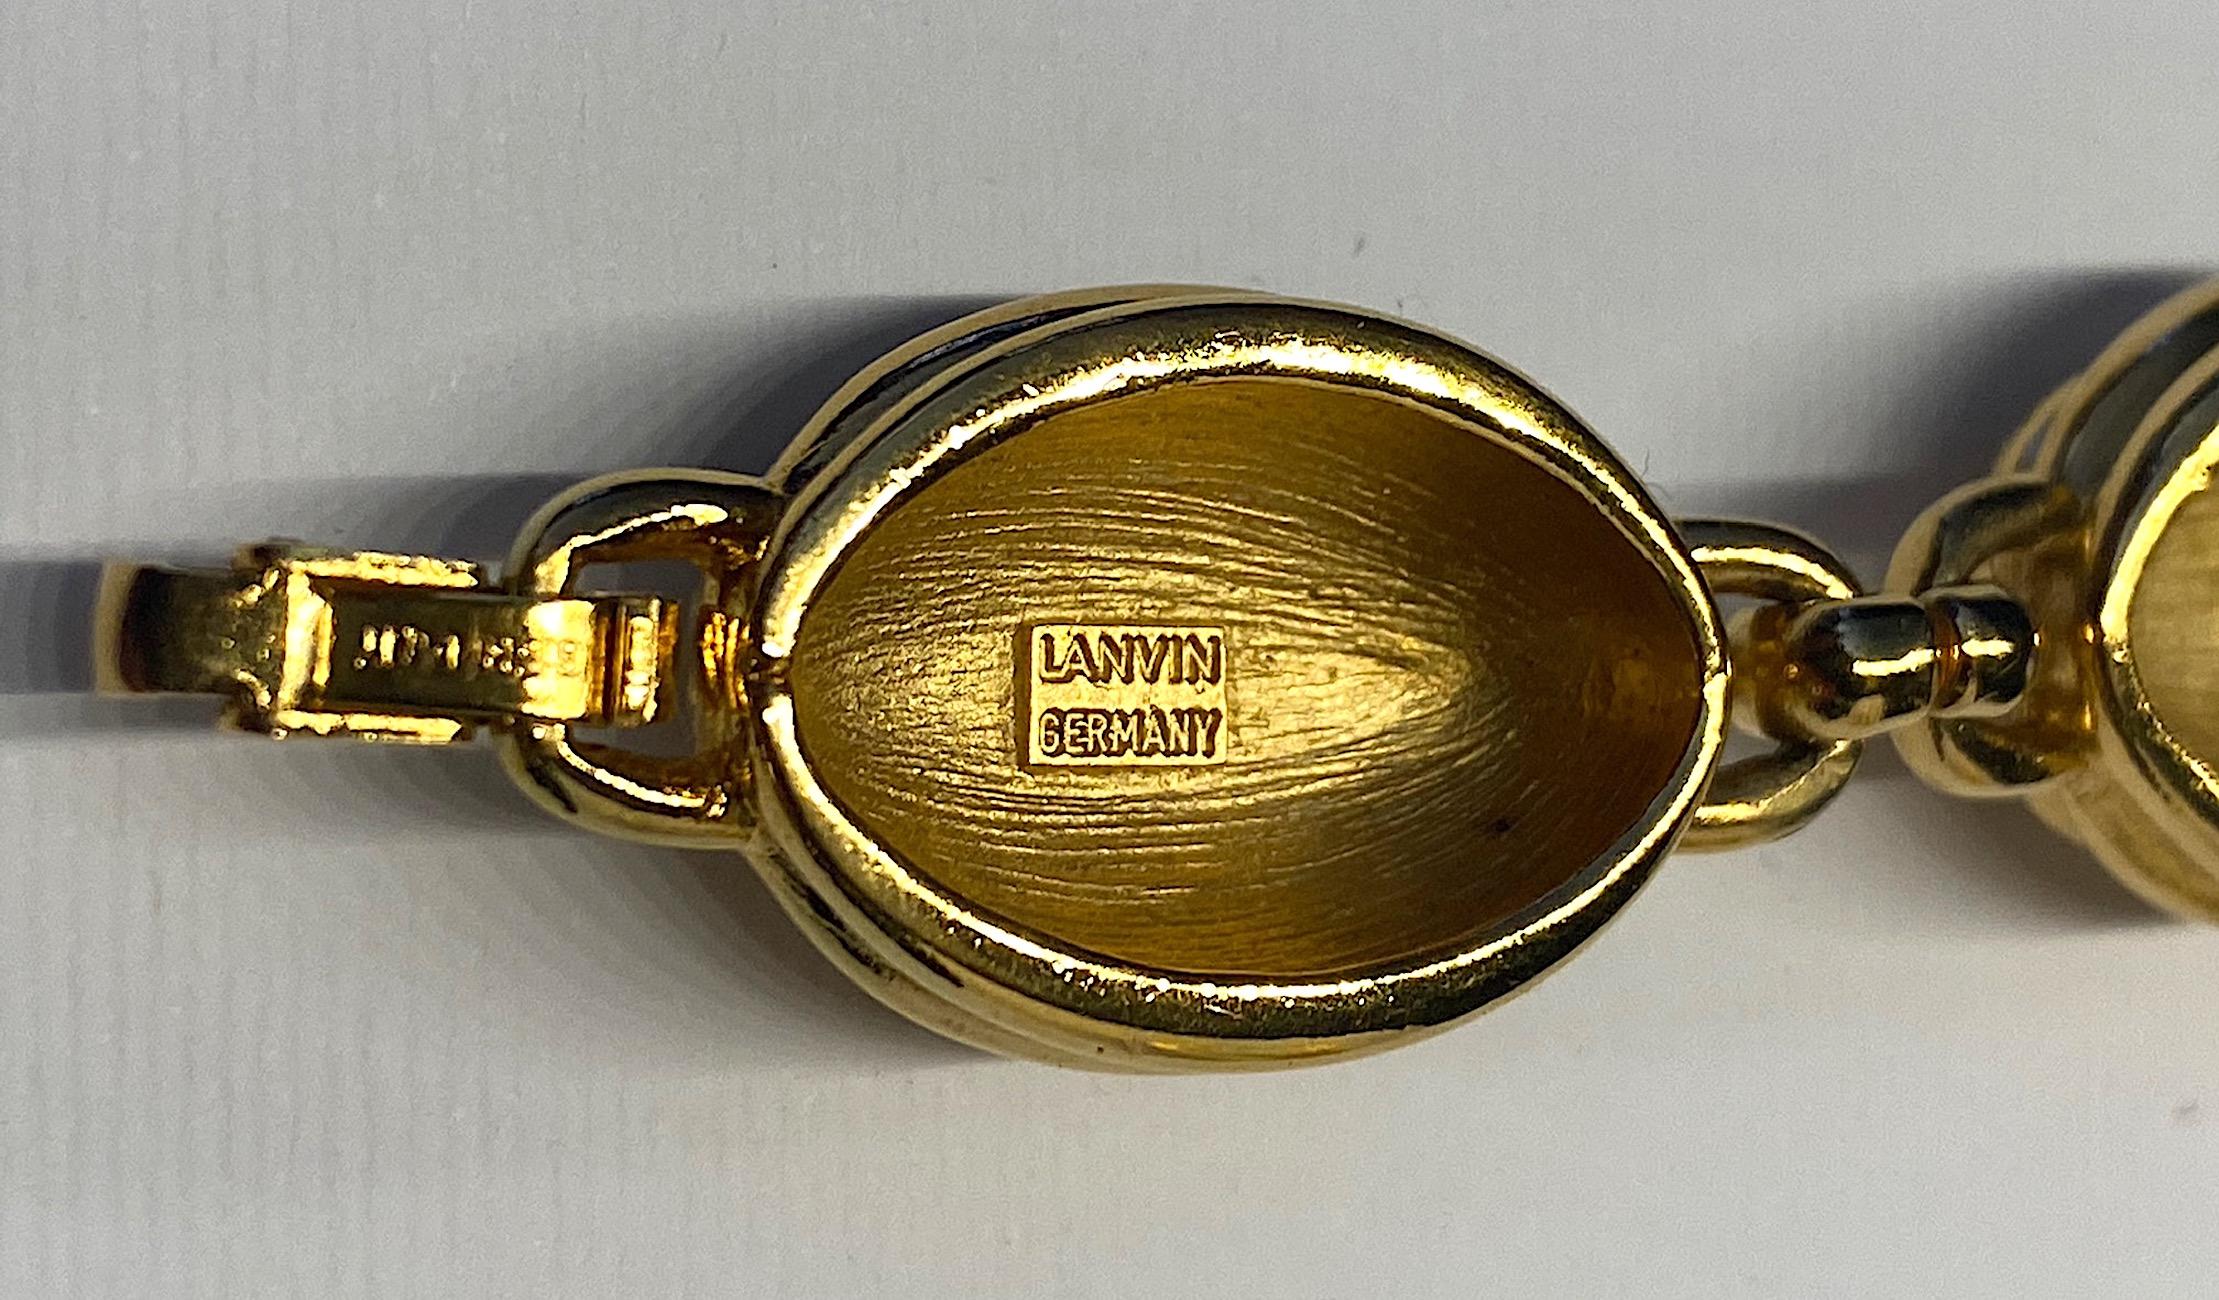 Lanvin Gold Dome Oval Link 1980s Bracelet by Henkel & Grosse' 13